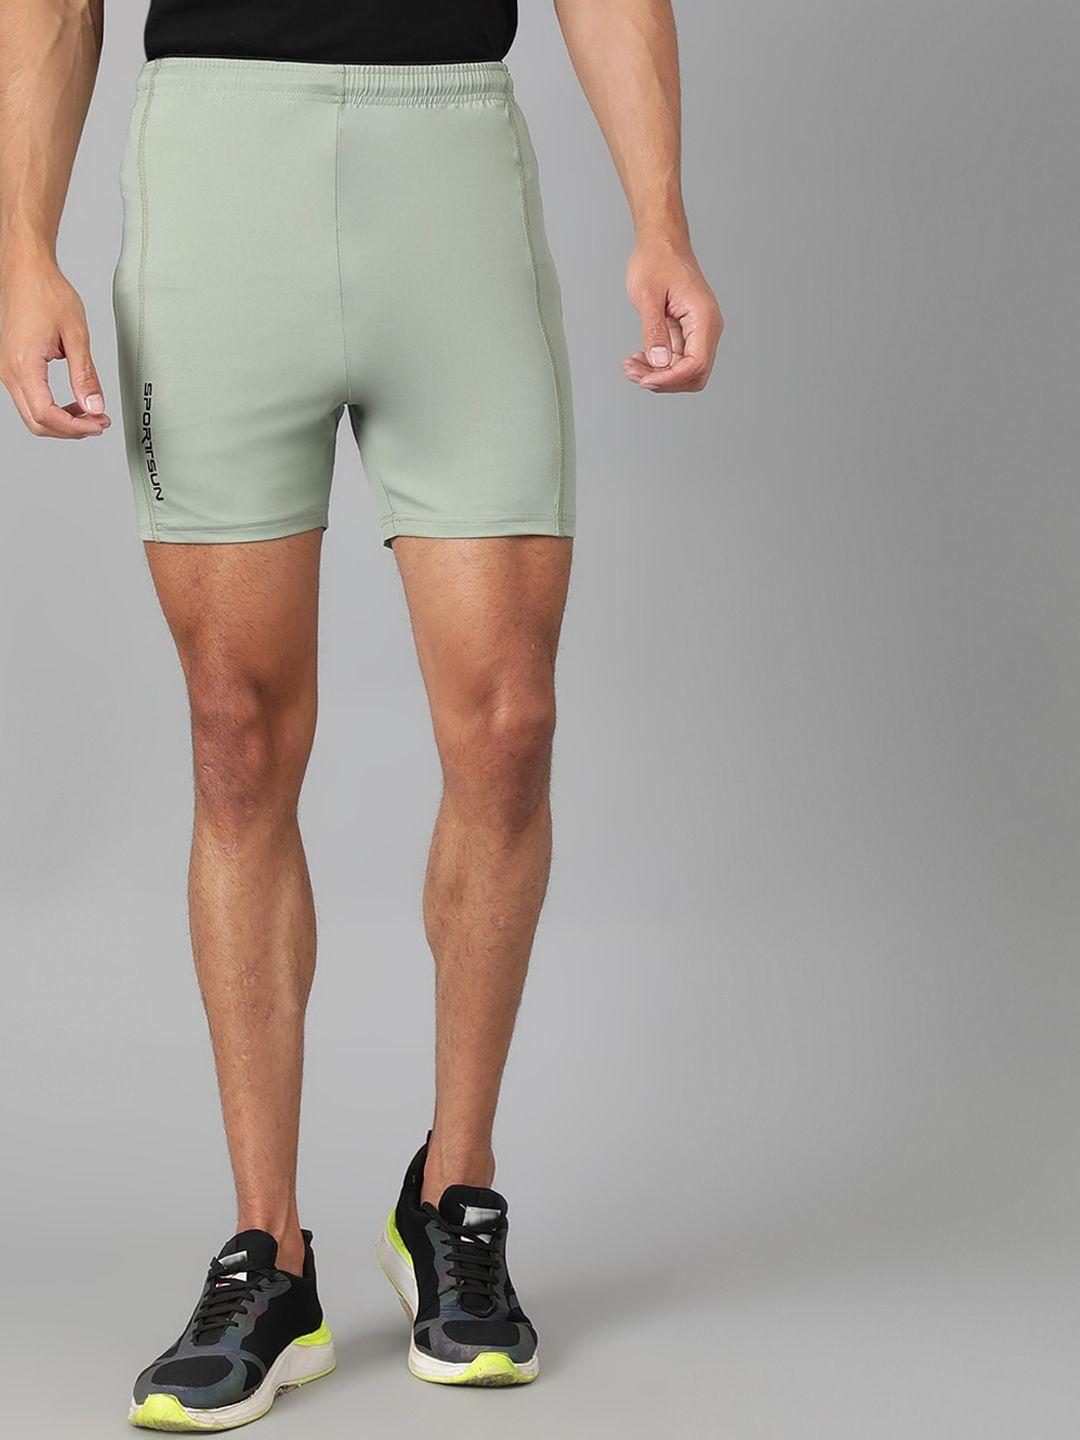 sport-sun-men-mid-rise-above-knee-sports-shorts